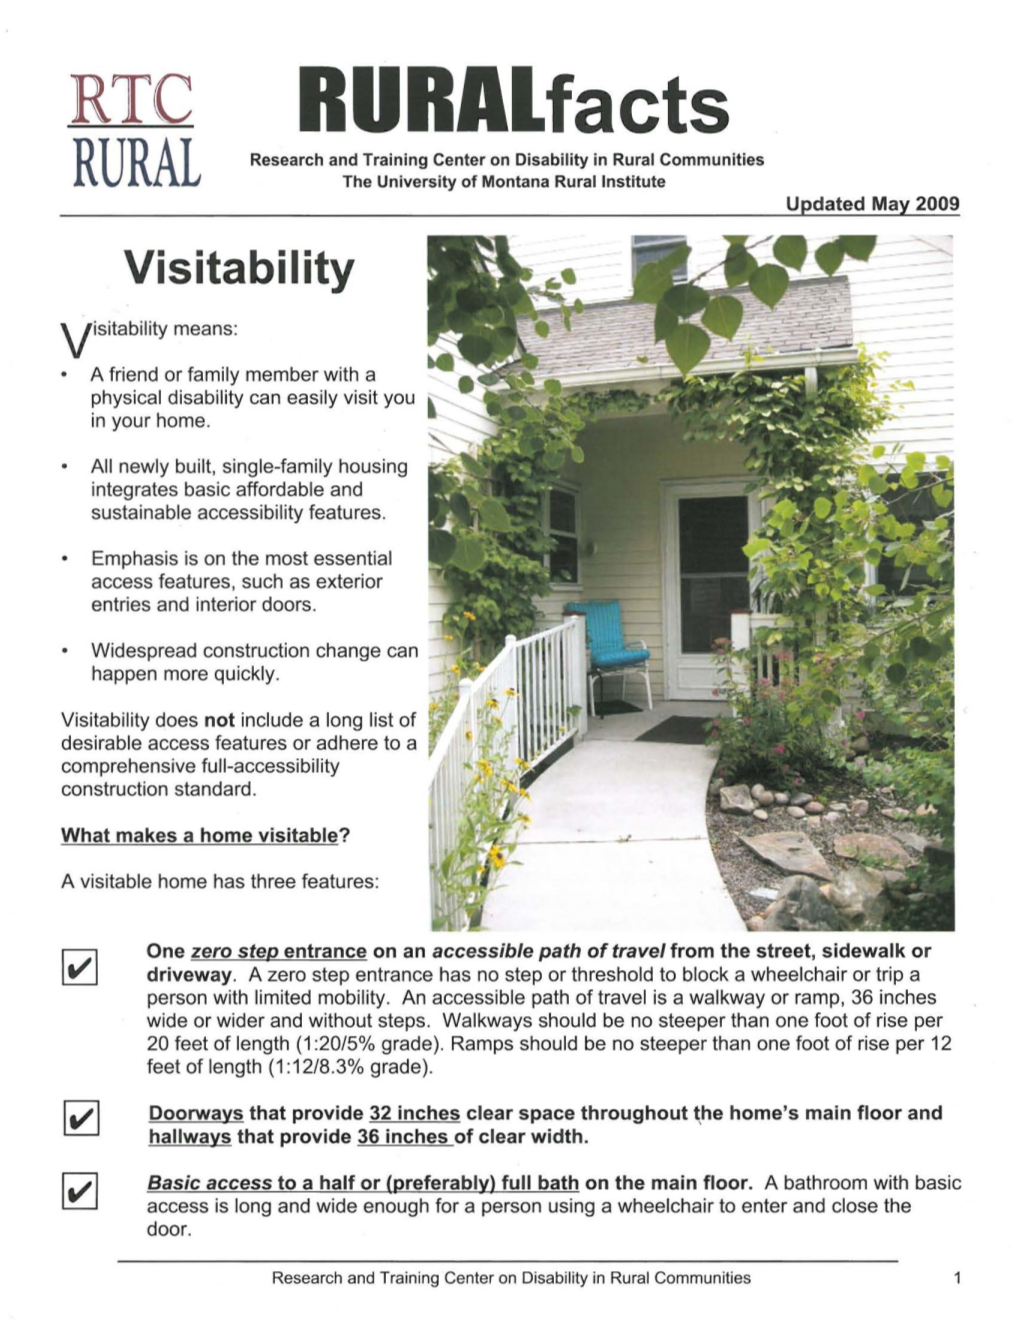 Rural Fact Sheet on Visitability